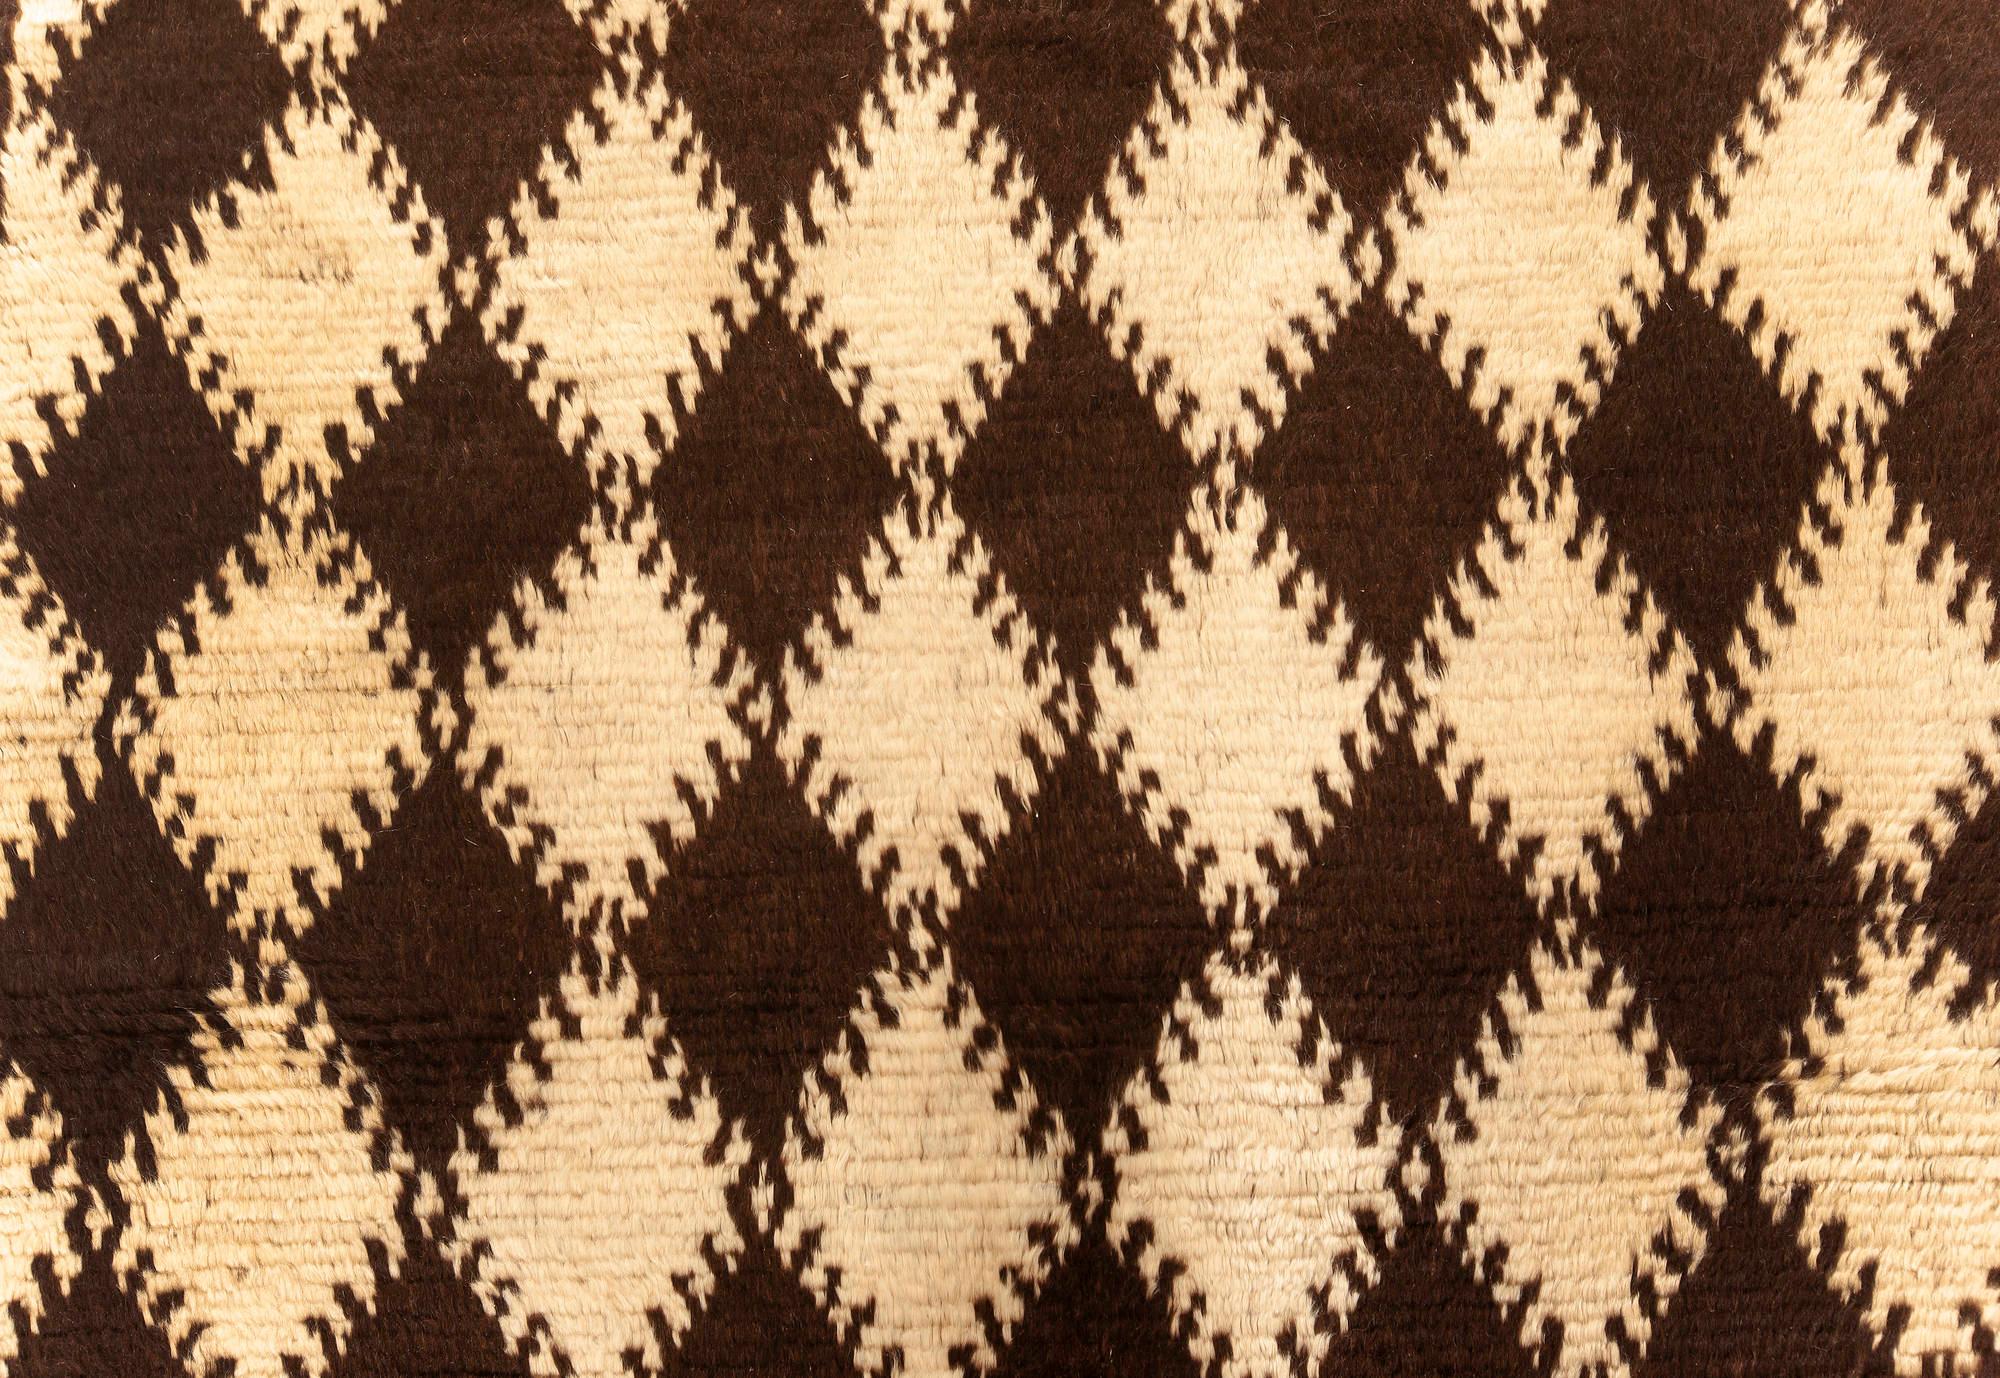 Mid-20th century Moroccan diamond design, brown, beige handmade wool rug
Size: 4'5